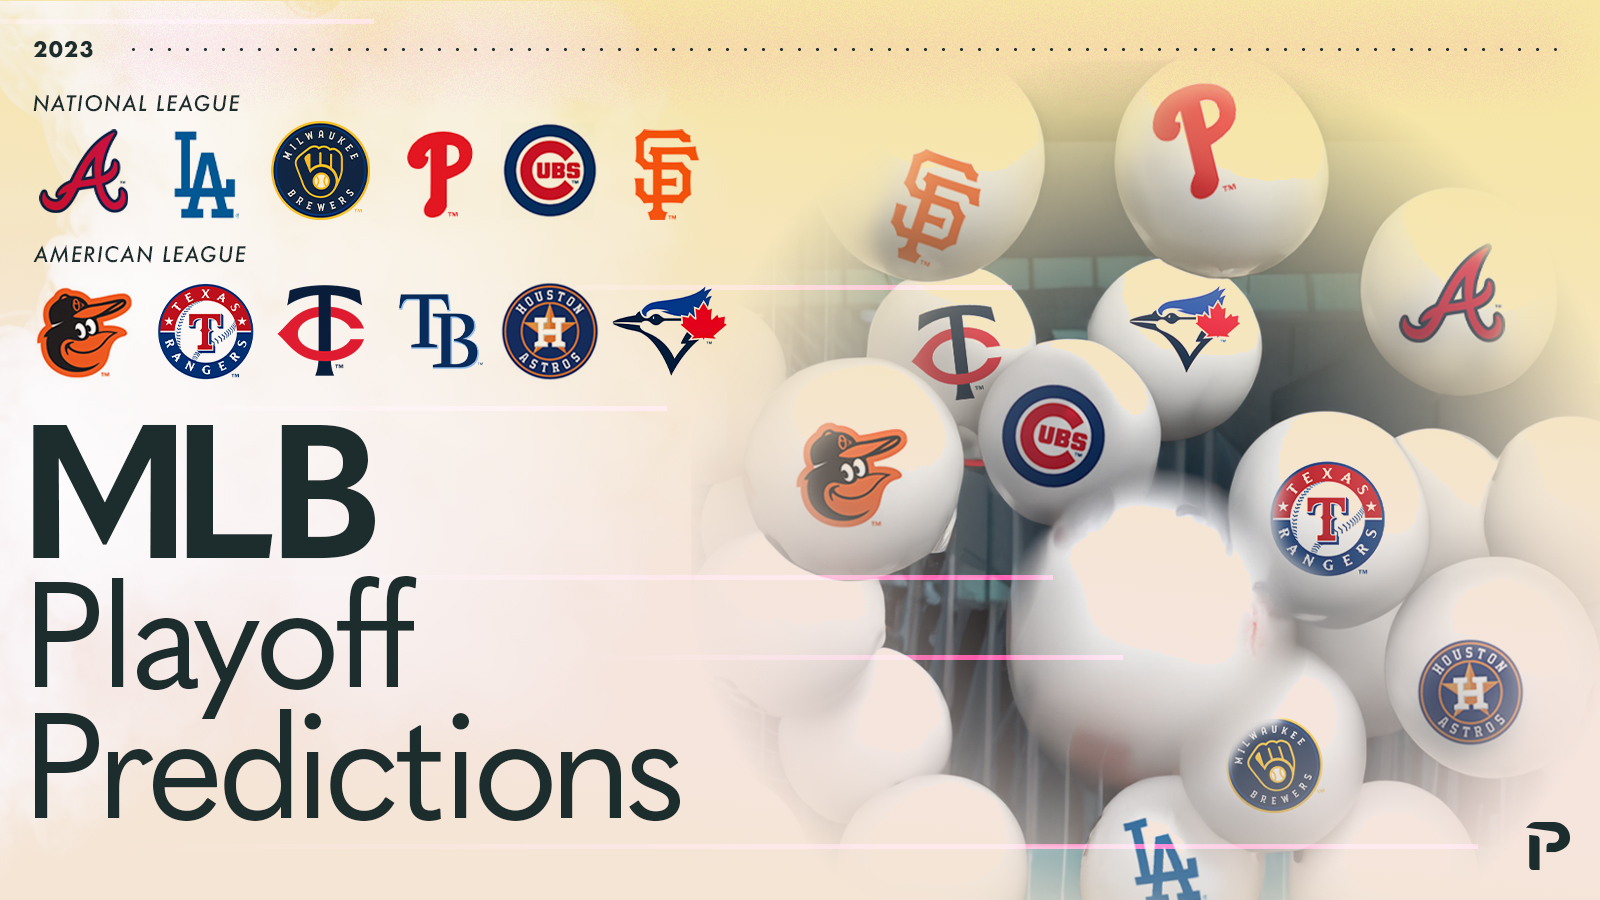 2023 MLB Postseason: Dodgers NLDS Schedule & How To Watch 